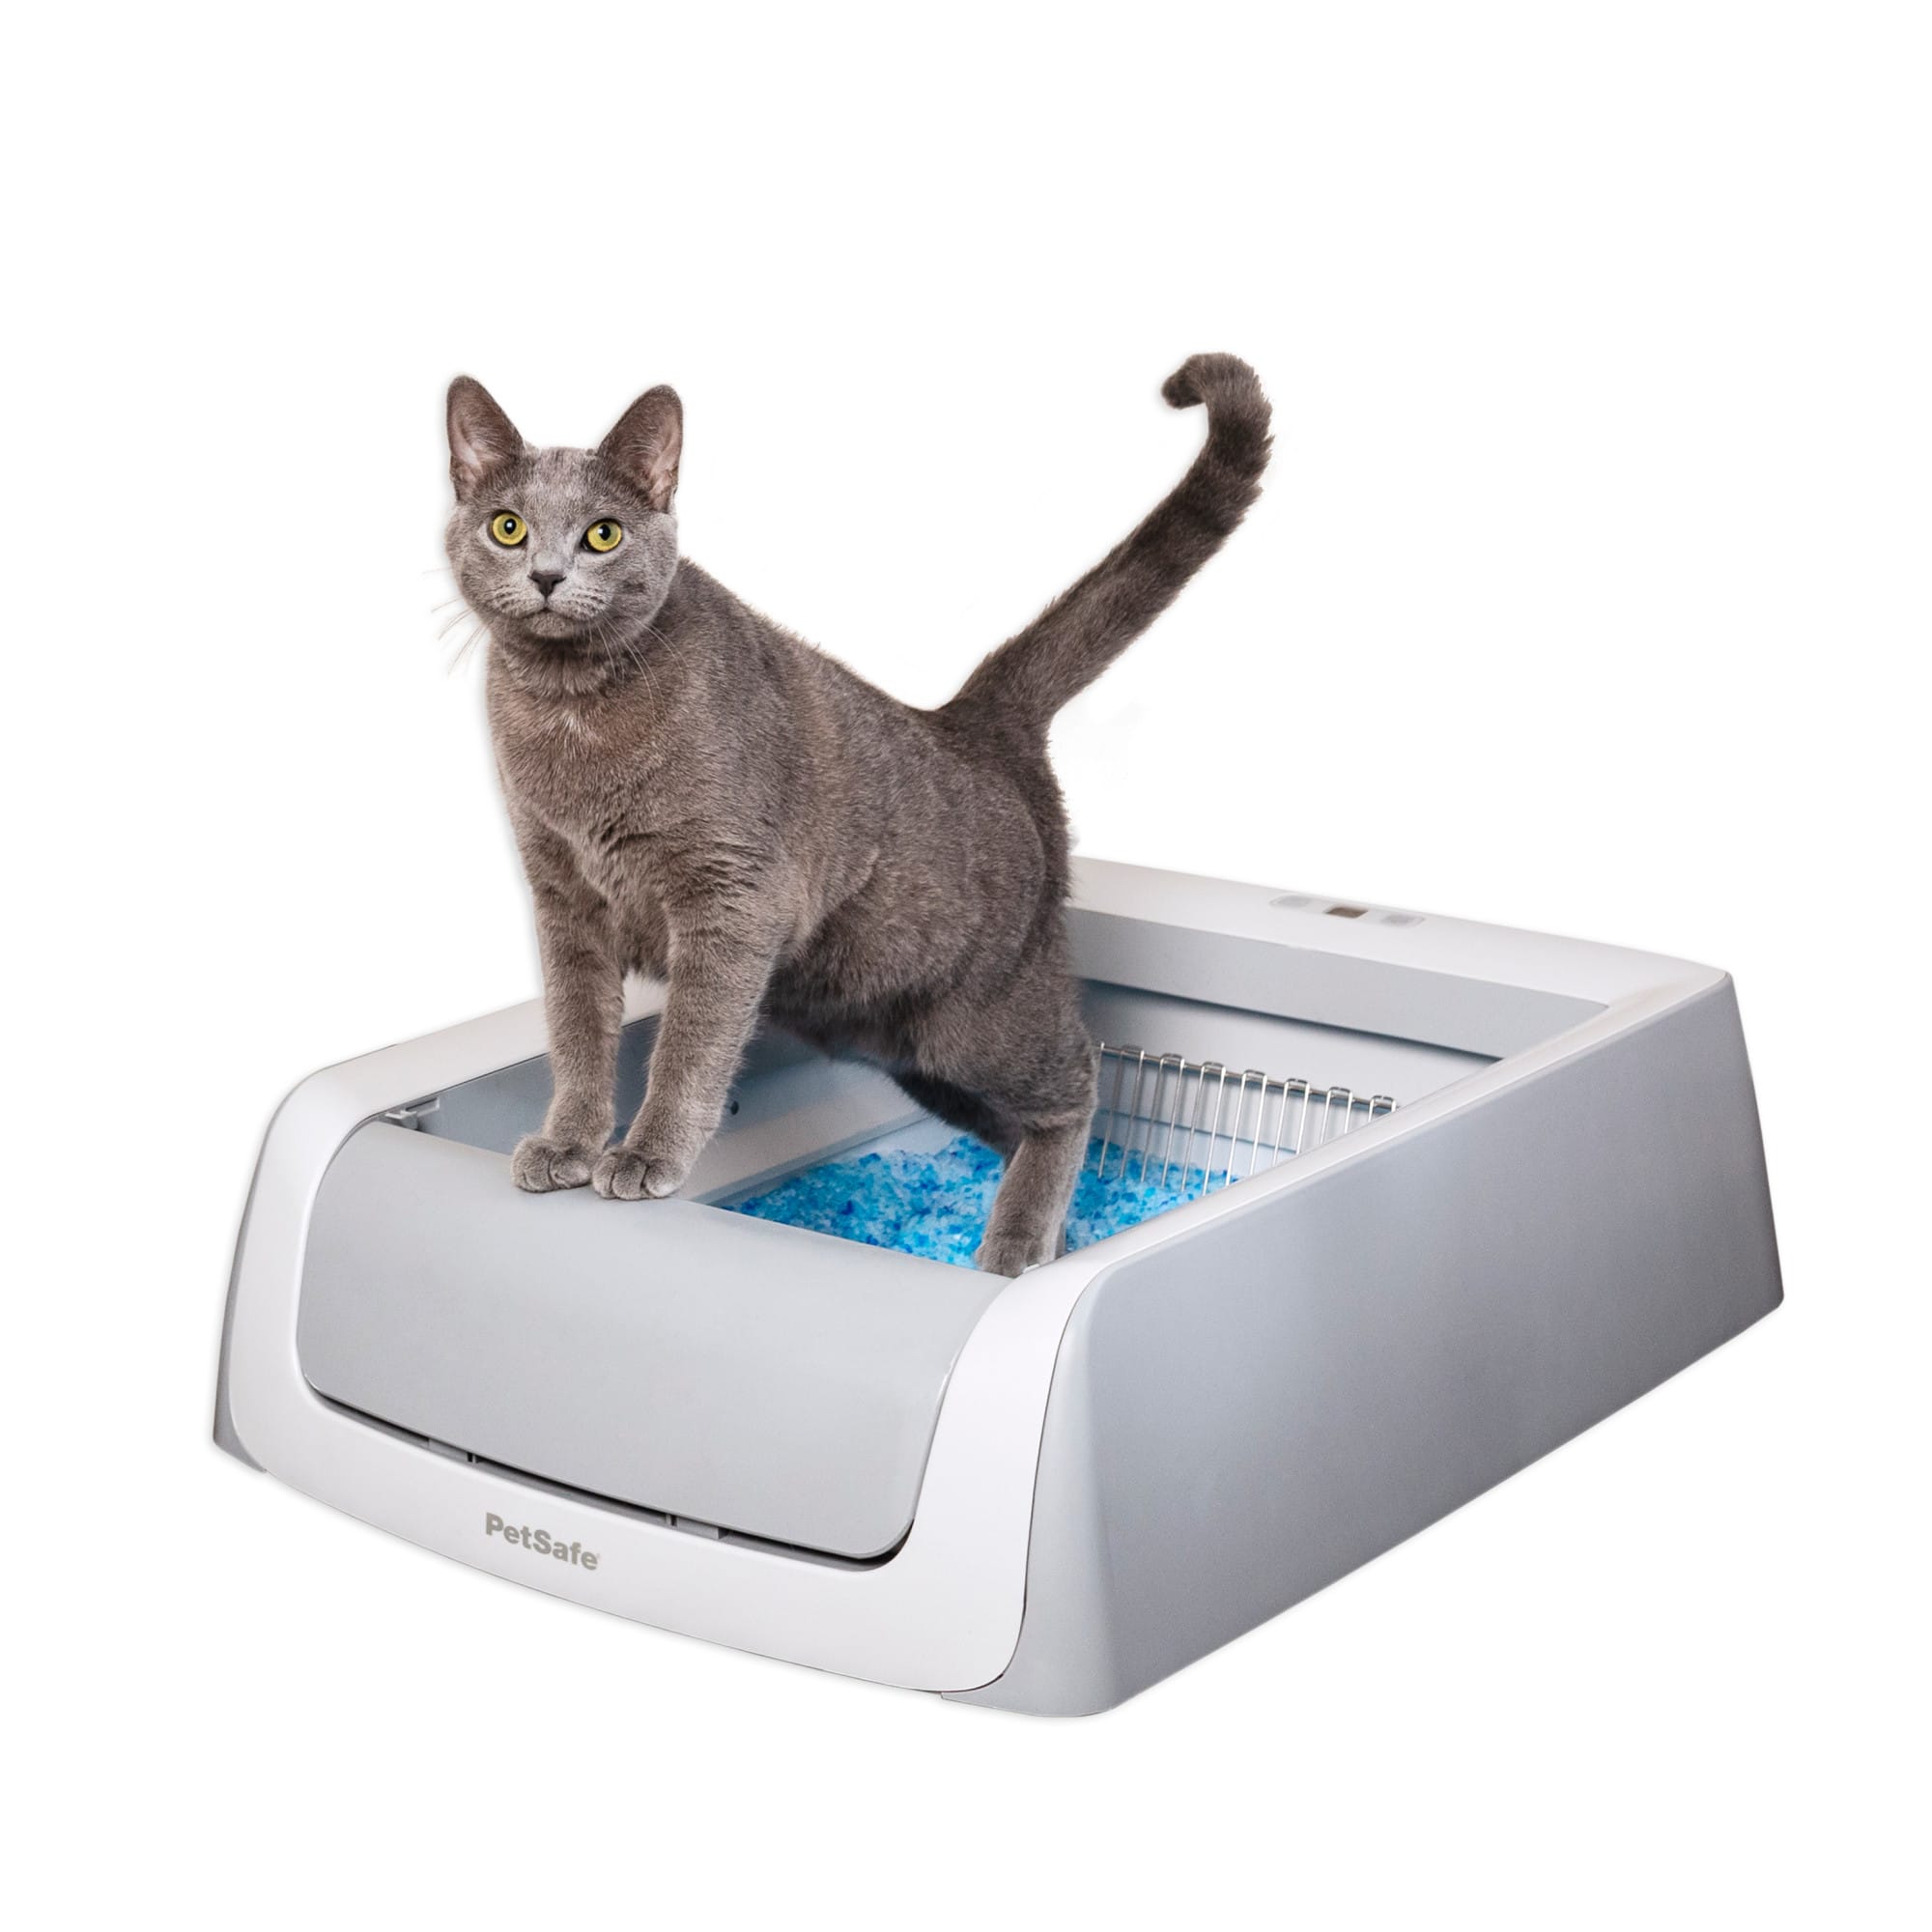 ScoopFree by PetSafe Self-Cleaning Second Generation Cat Litter Box